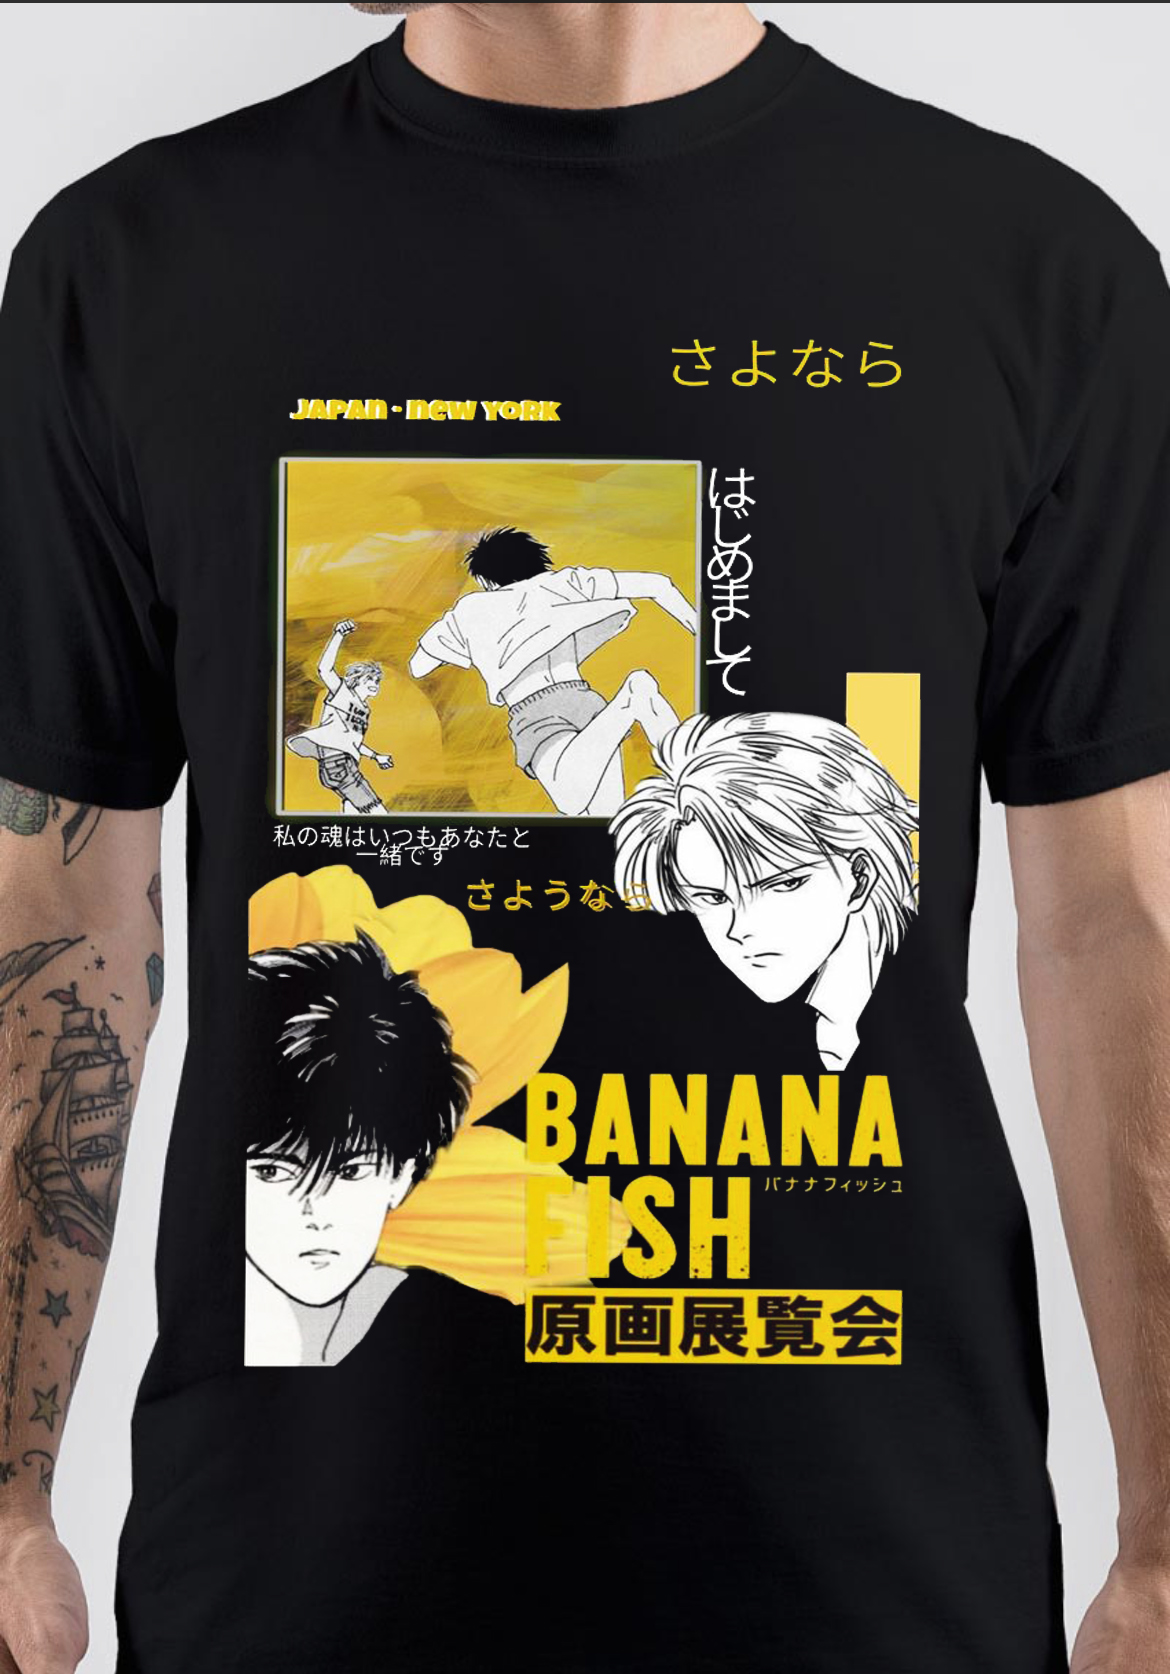 https://sharkshirts.in/wp-content/uploads/2022/08/Banana-Fish-T-Shirt1.jpg